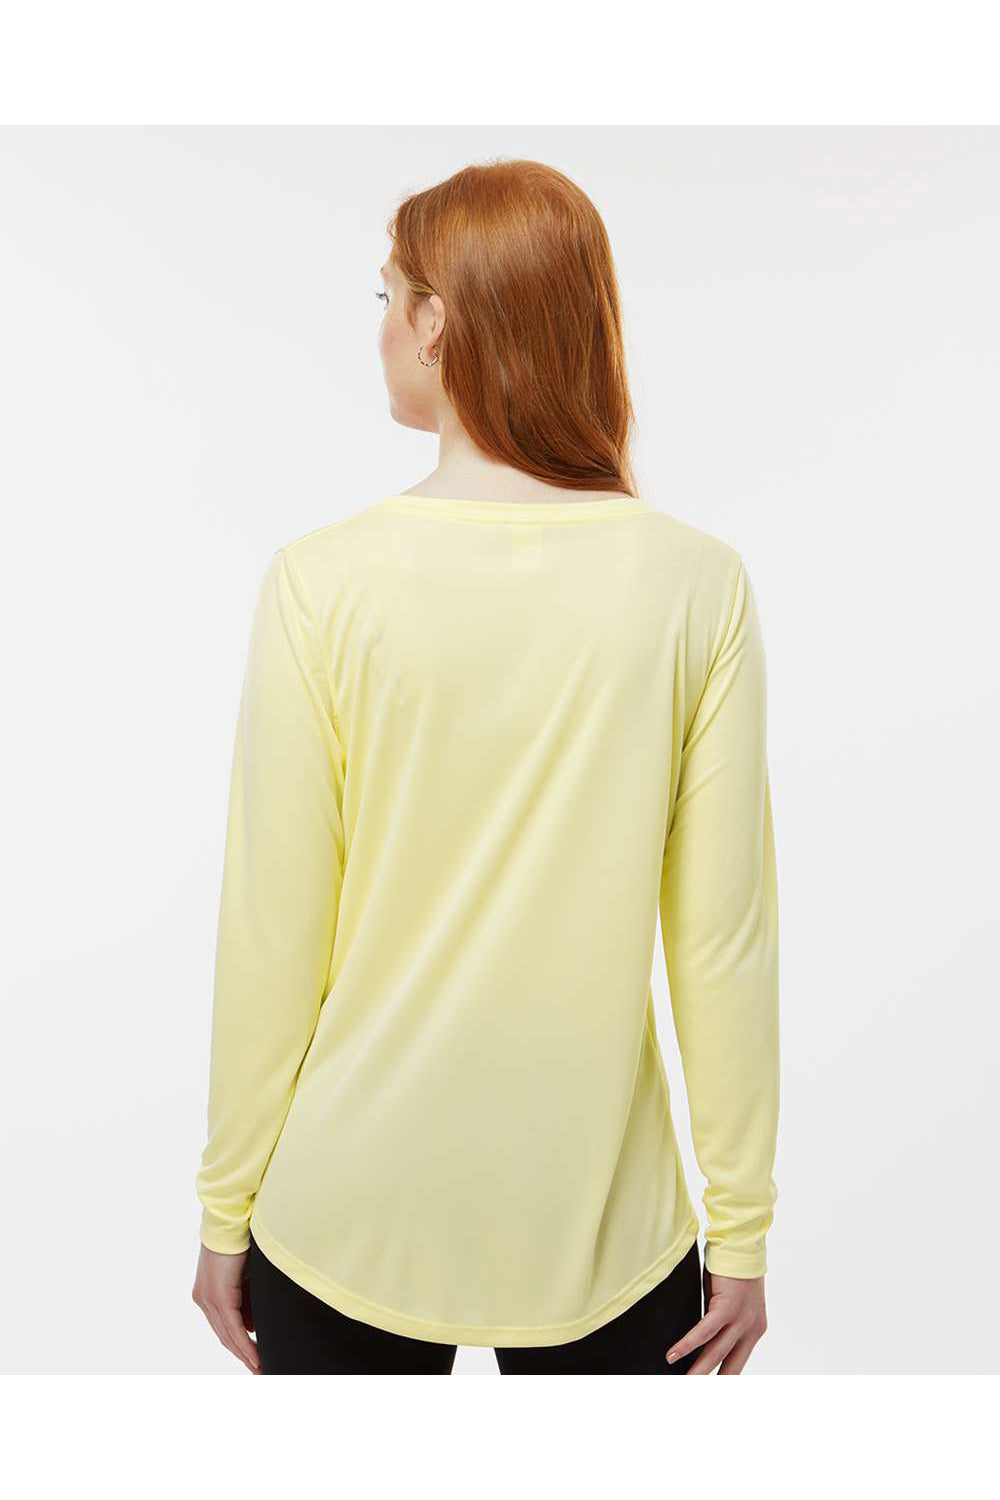 Paragon 214 Womens Islander Performance Long Sleeve Scoop Neck T-Shirt Pale Yellow Model Back